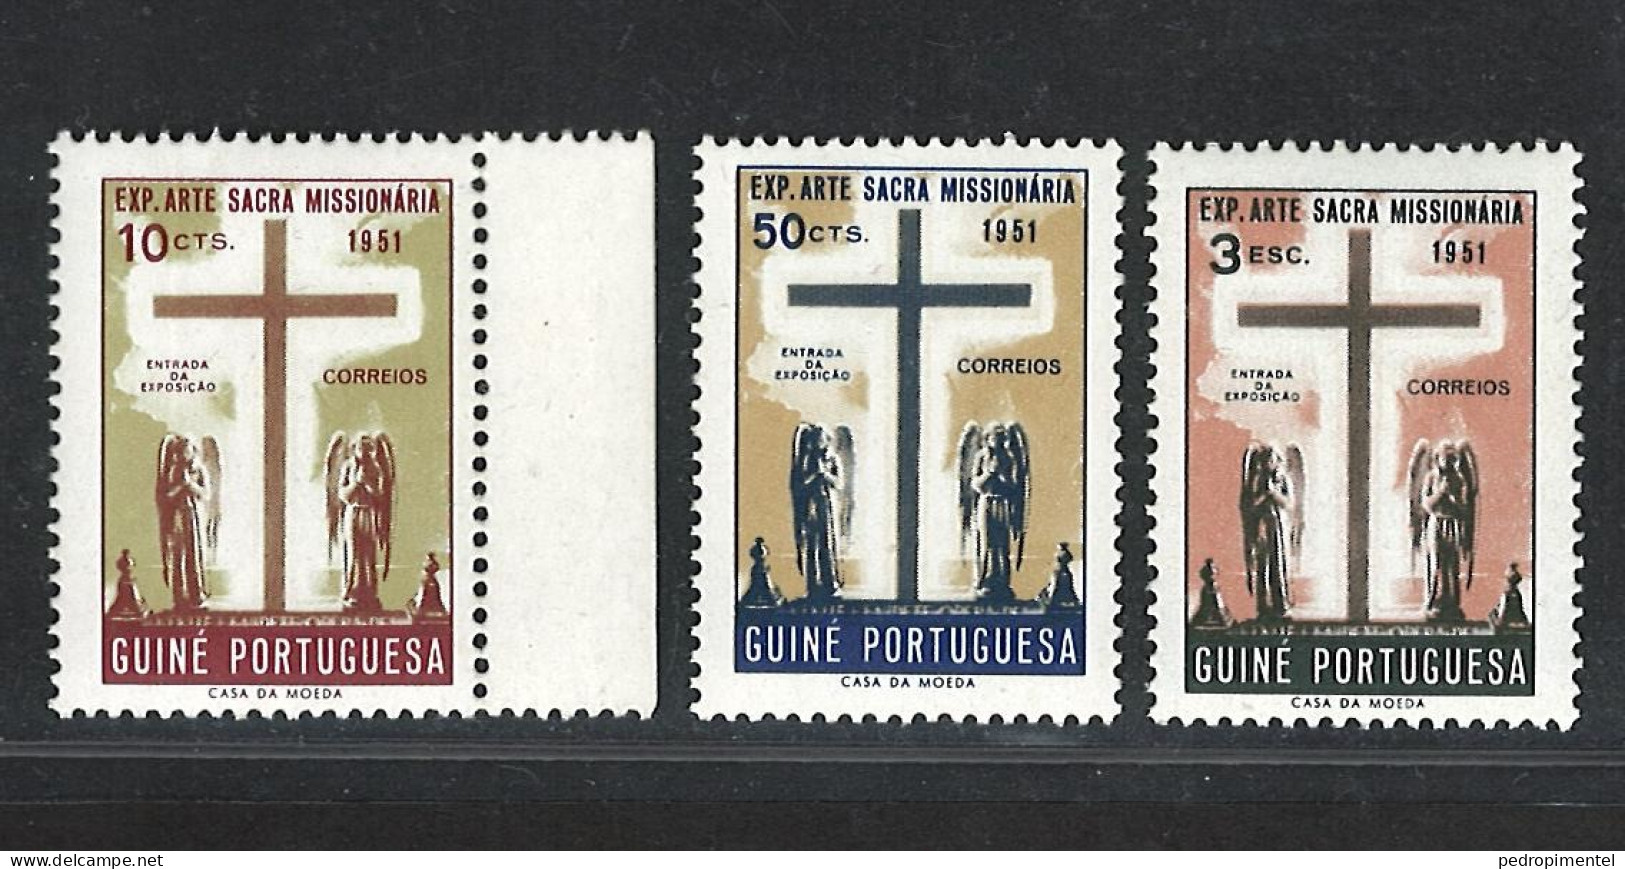 Portugal Guinee 1953 "Sacred Art" MNH OG #267-269 - Portugees Guinea